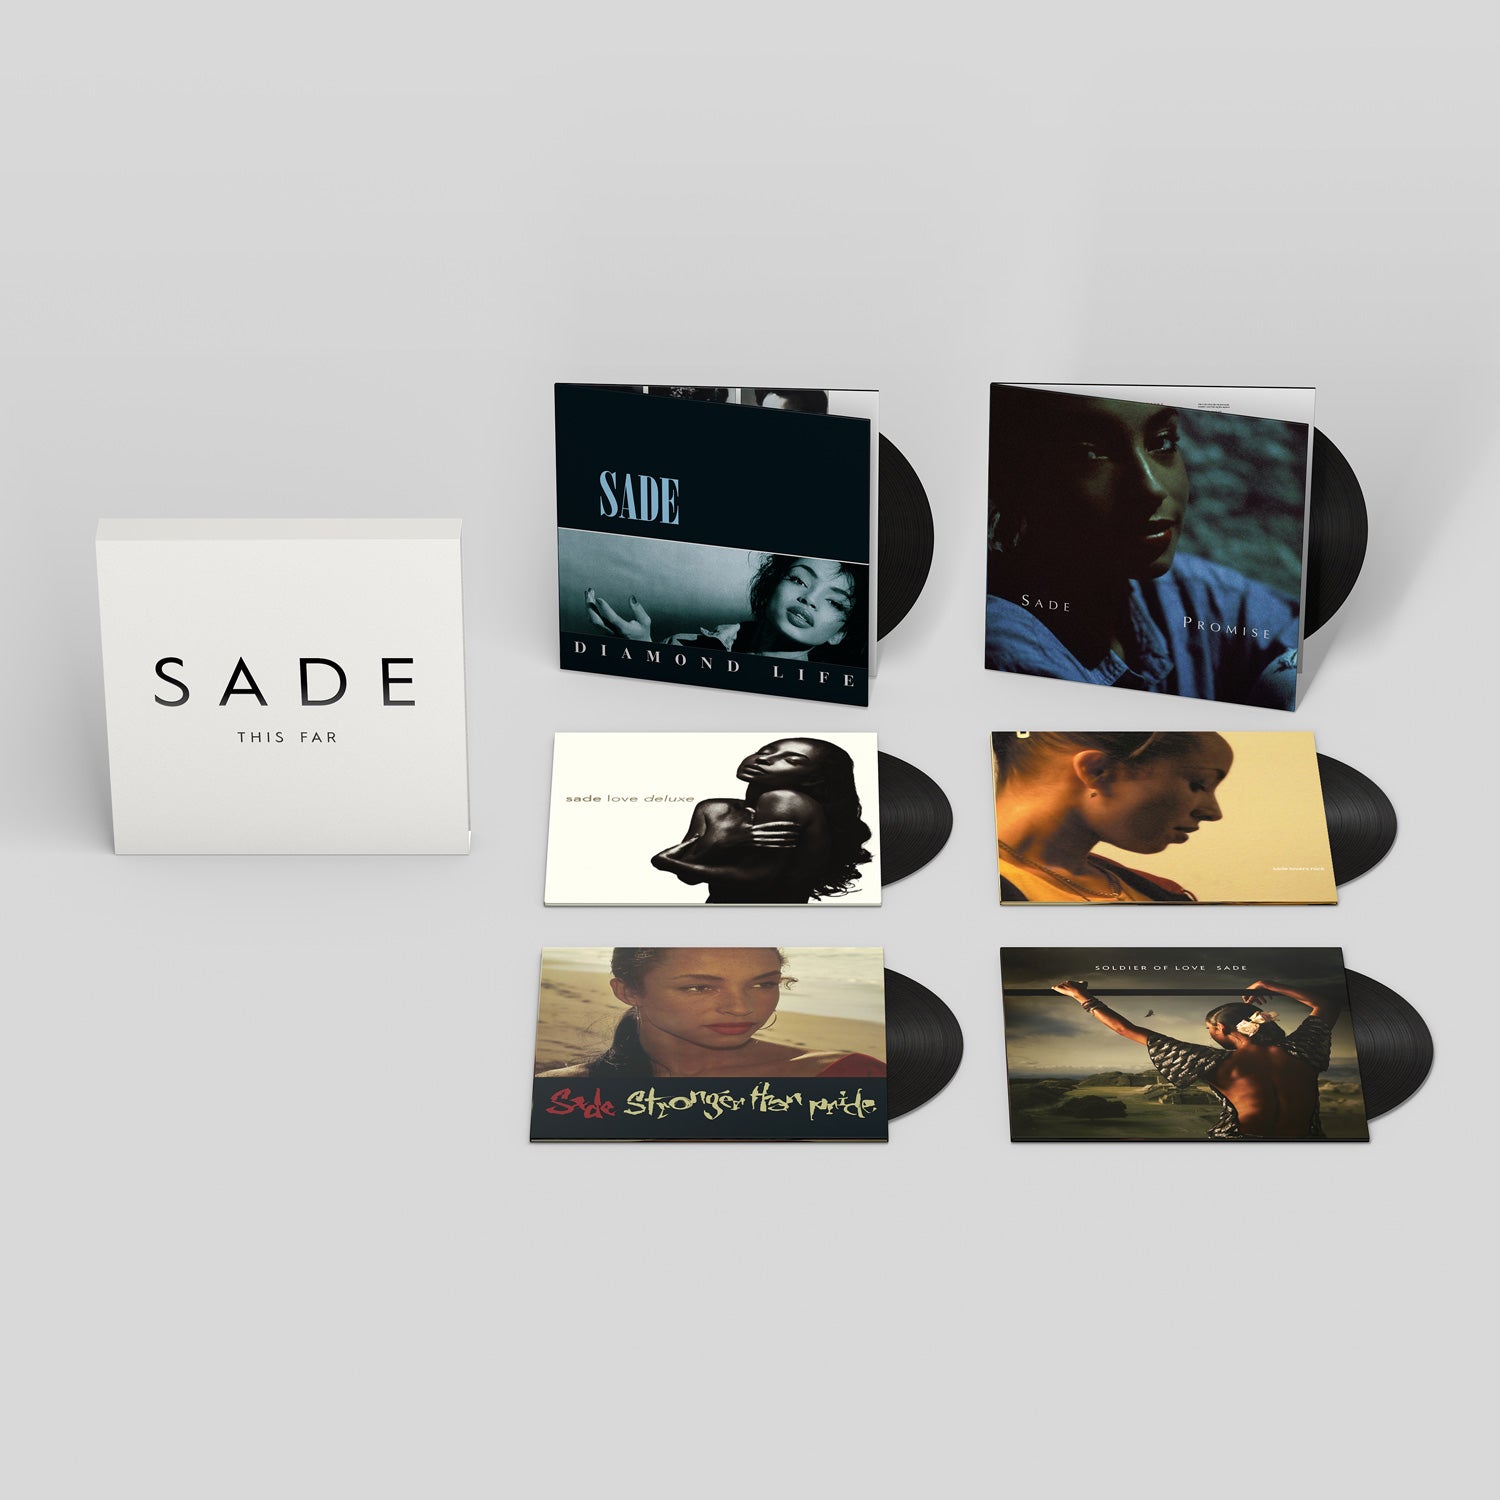 grund Hjemland spray This Far [6 Vinyl Albums Boxset] – Sade